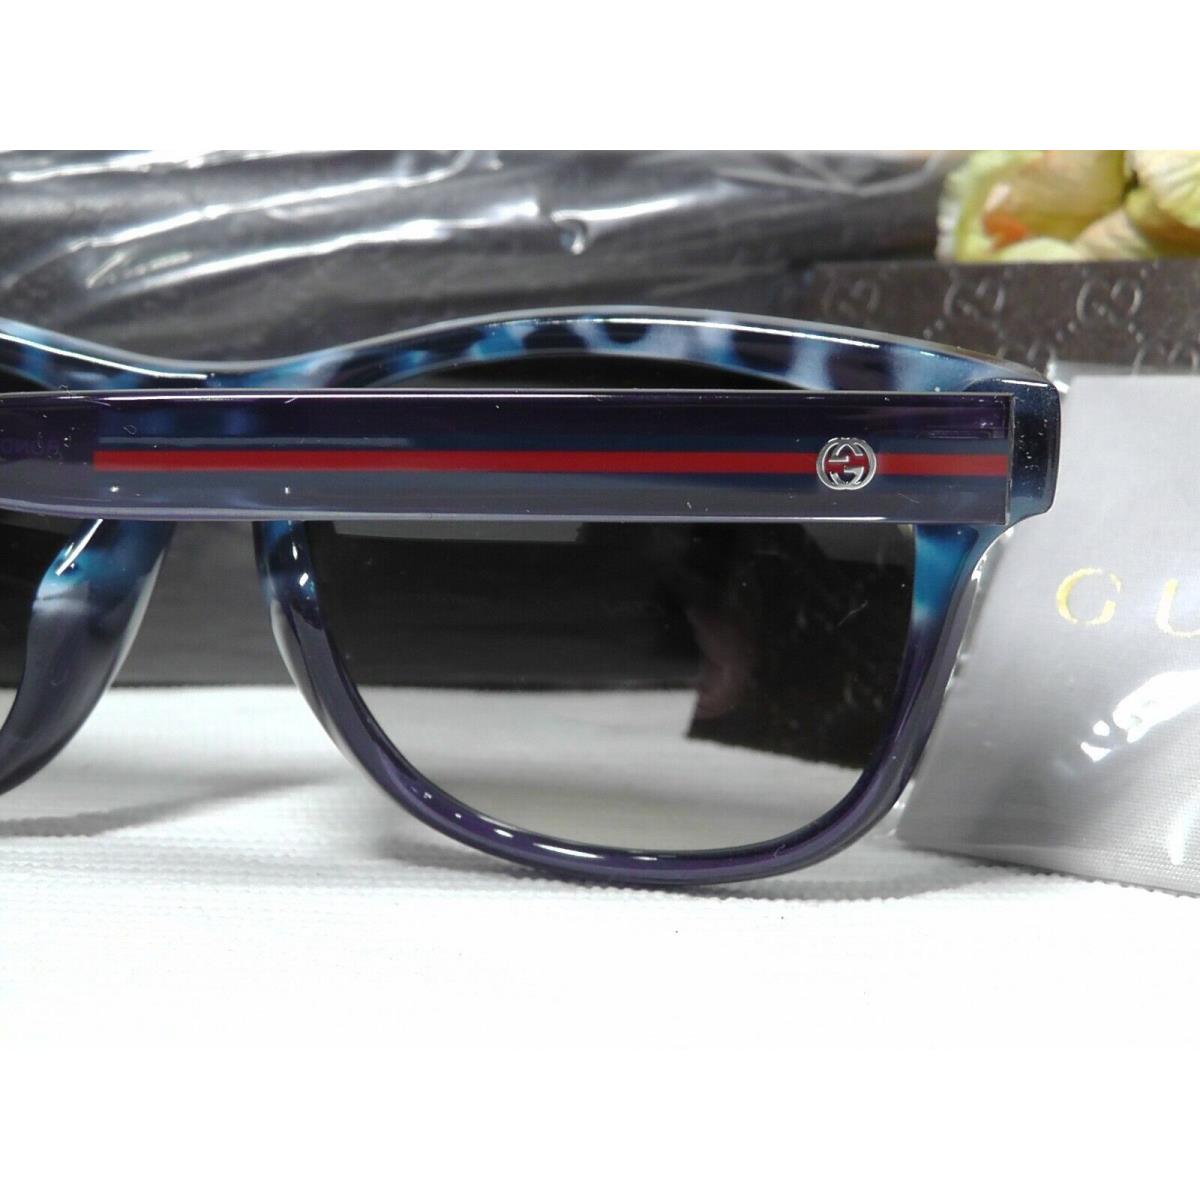 Gucci sunglasses  - Havana Blue Frame, Gray Lens 8